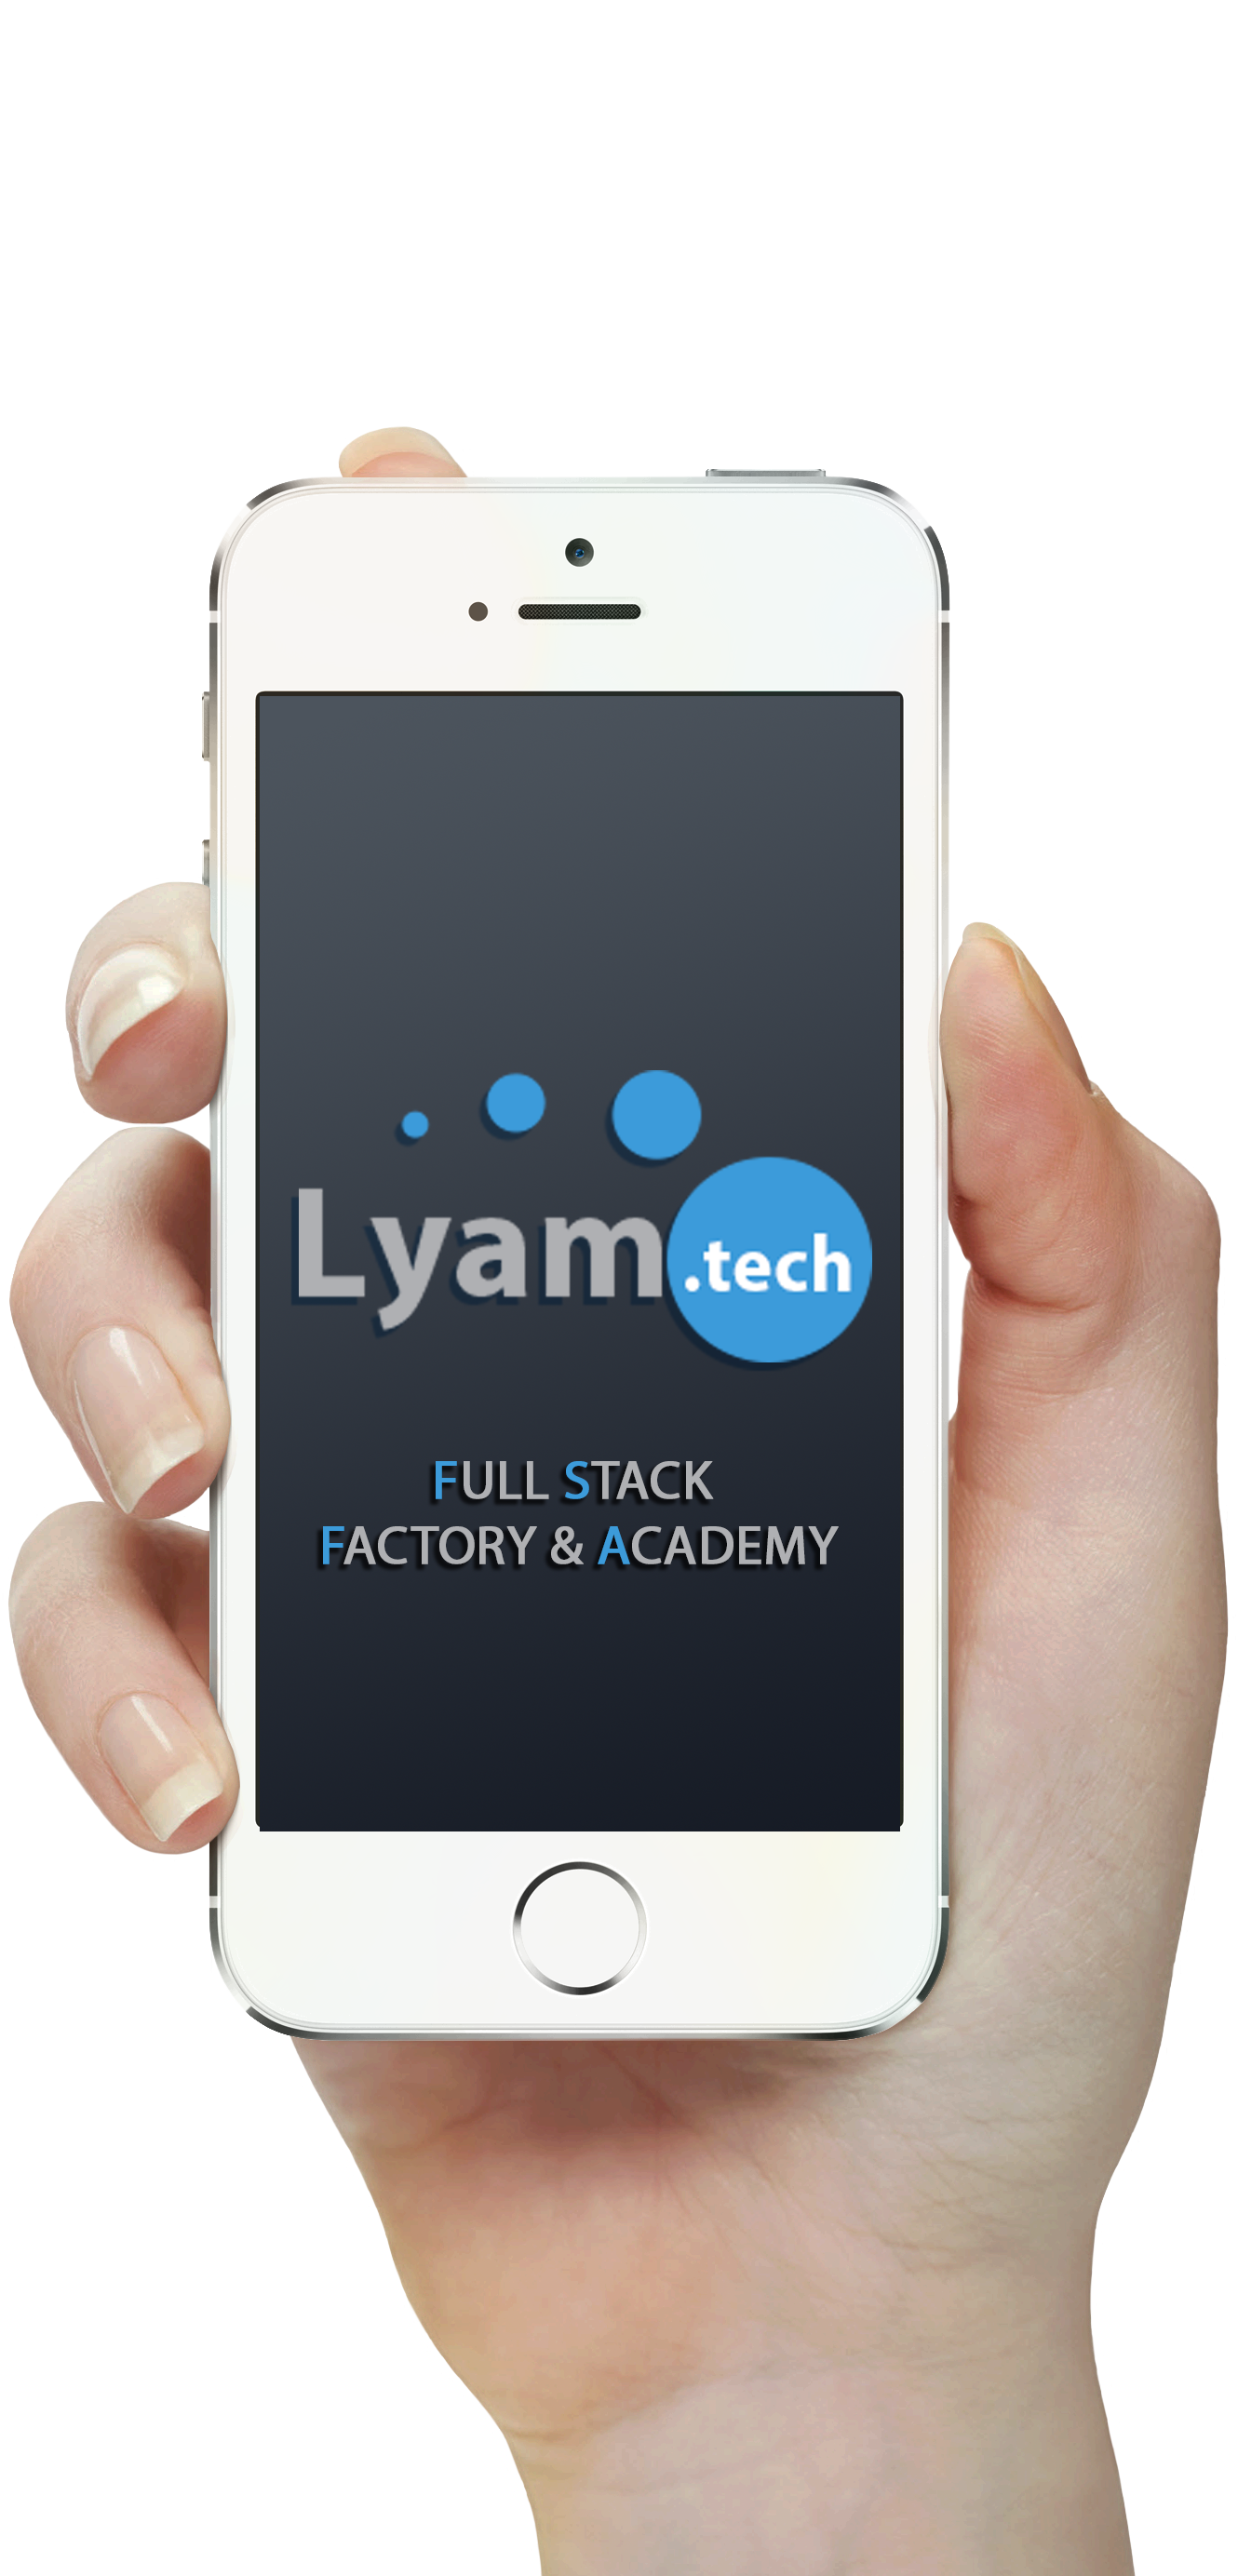 Lyam.tech - Full Stack Factory & Academy